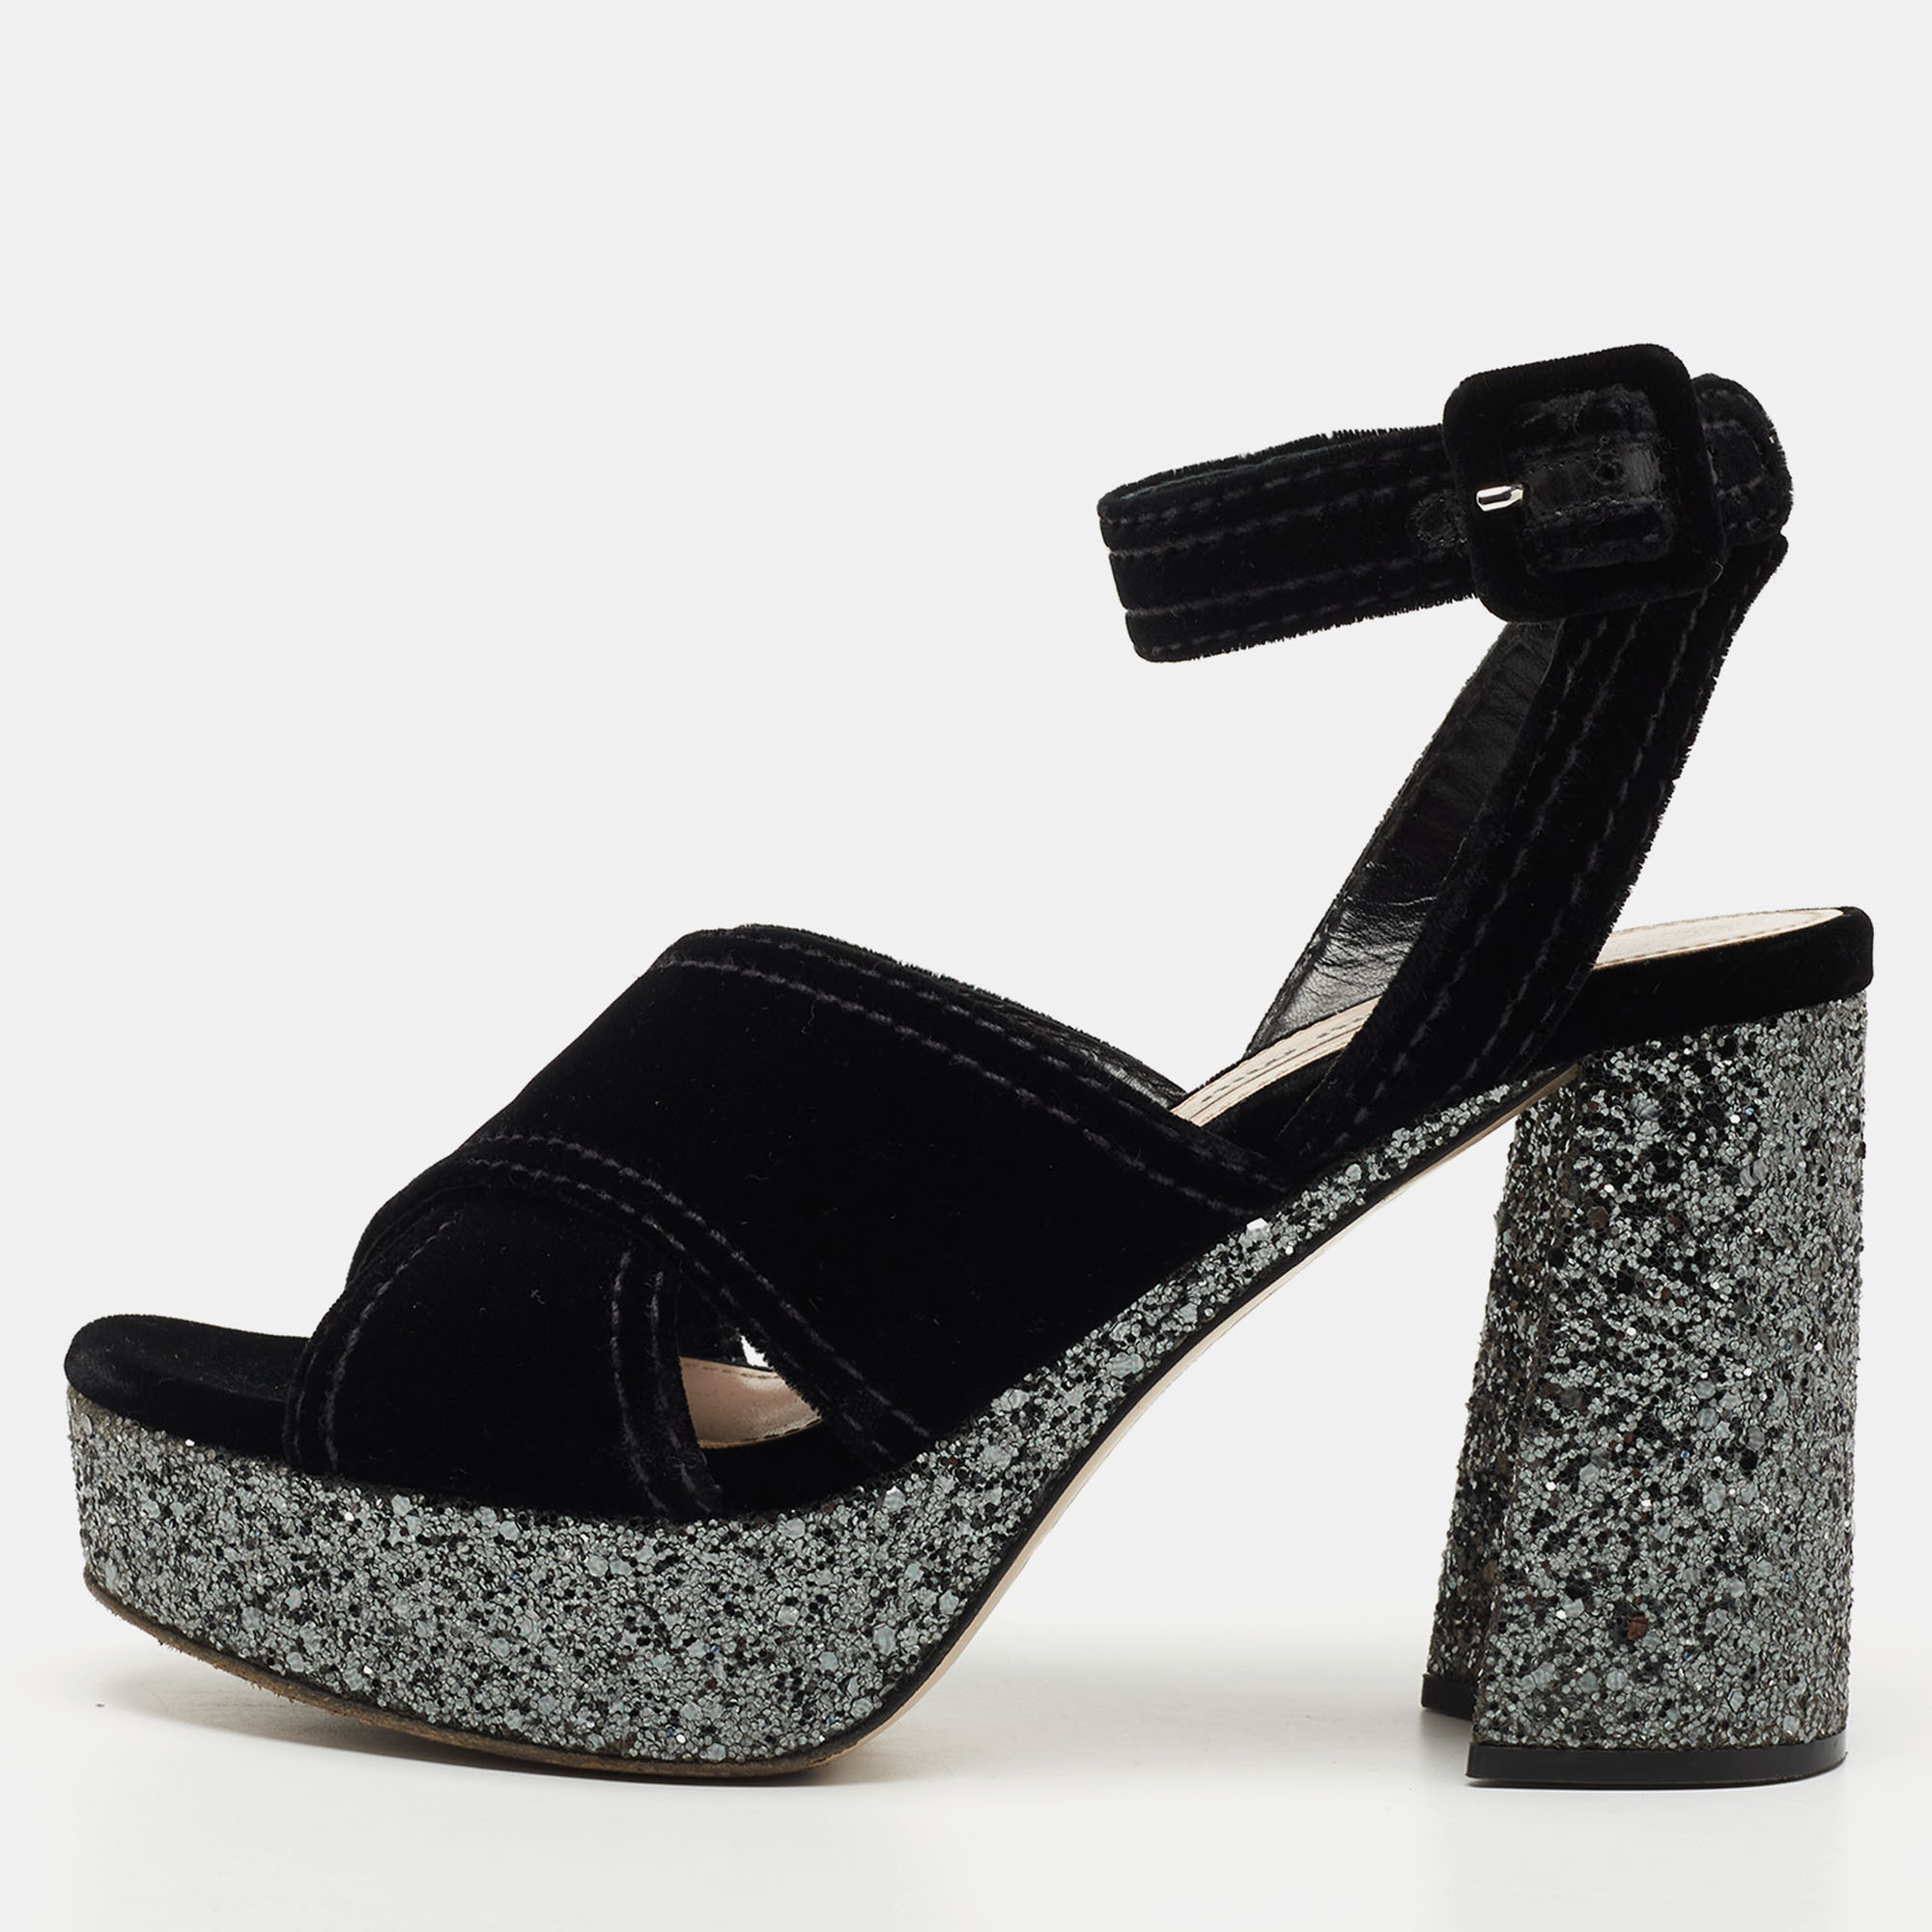 Miu miu black velvet and glitter platform ankle strap sandals size 37